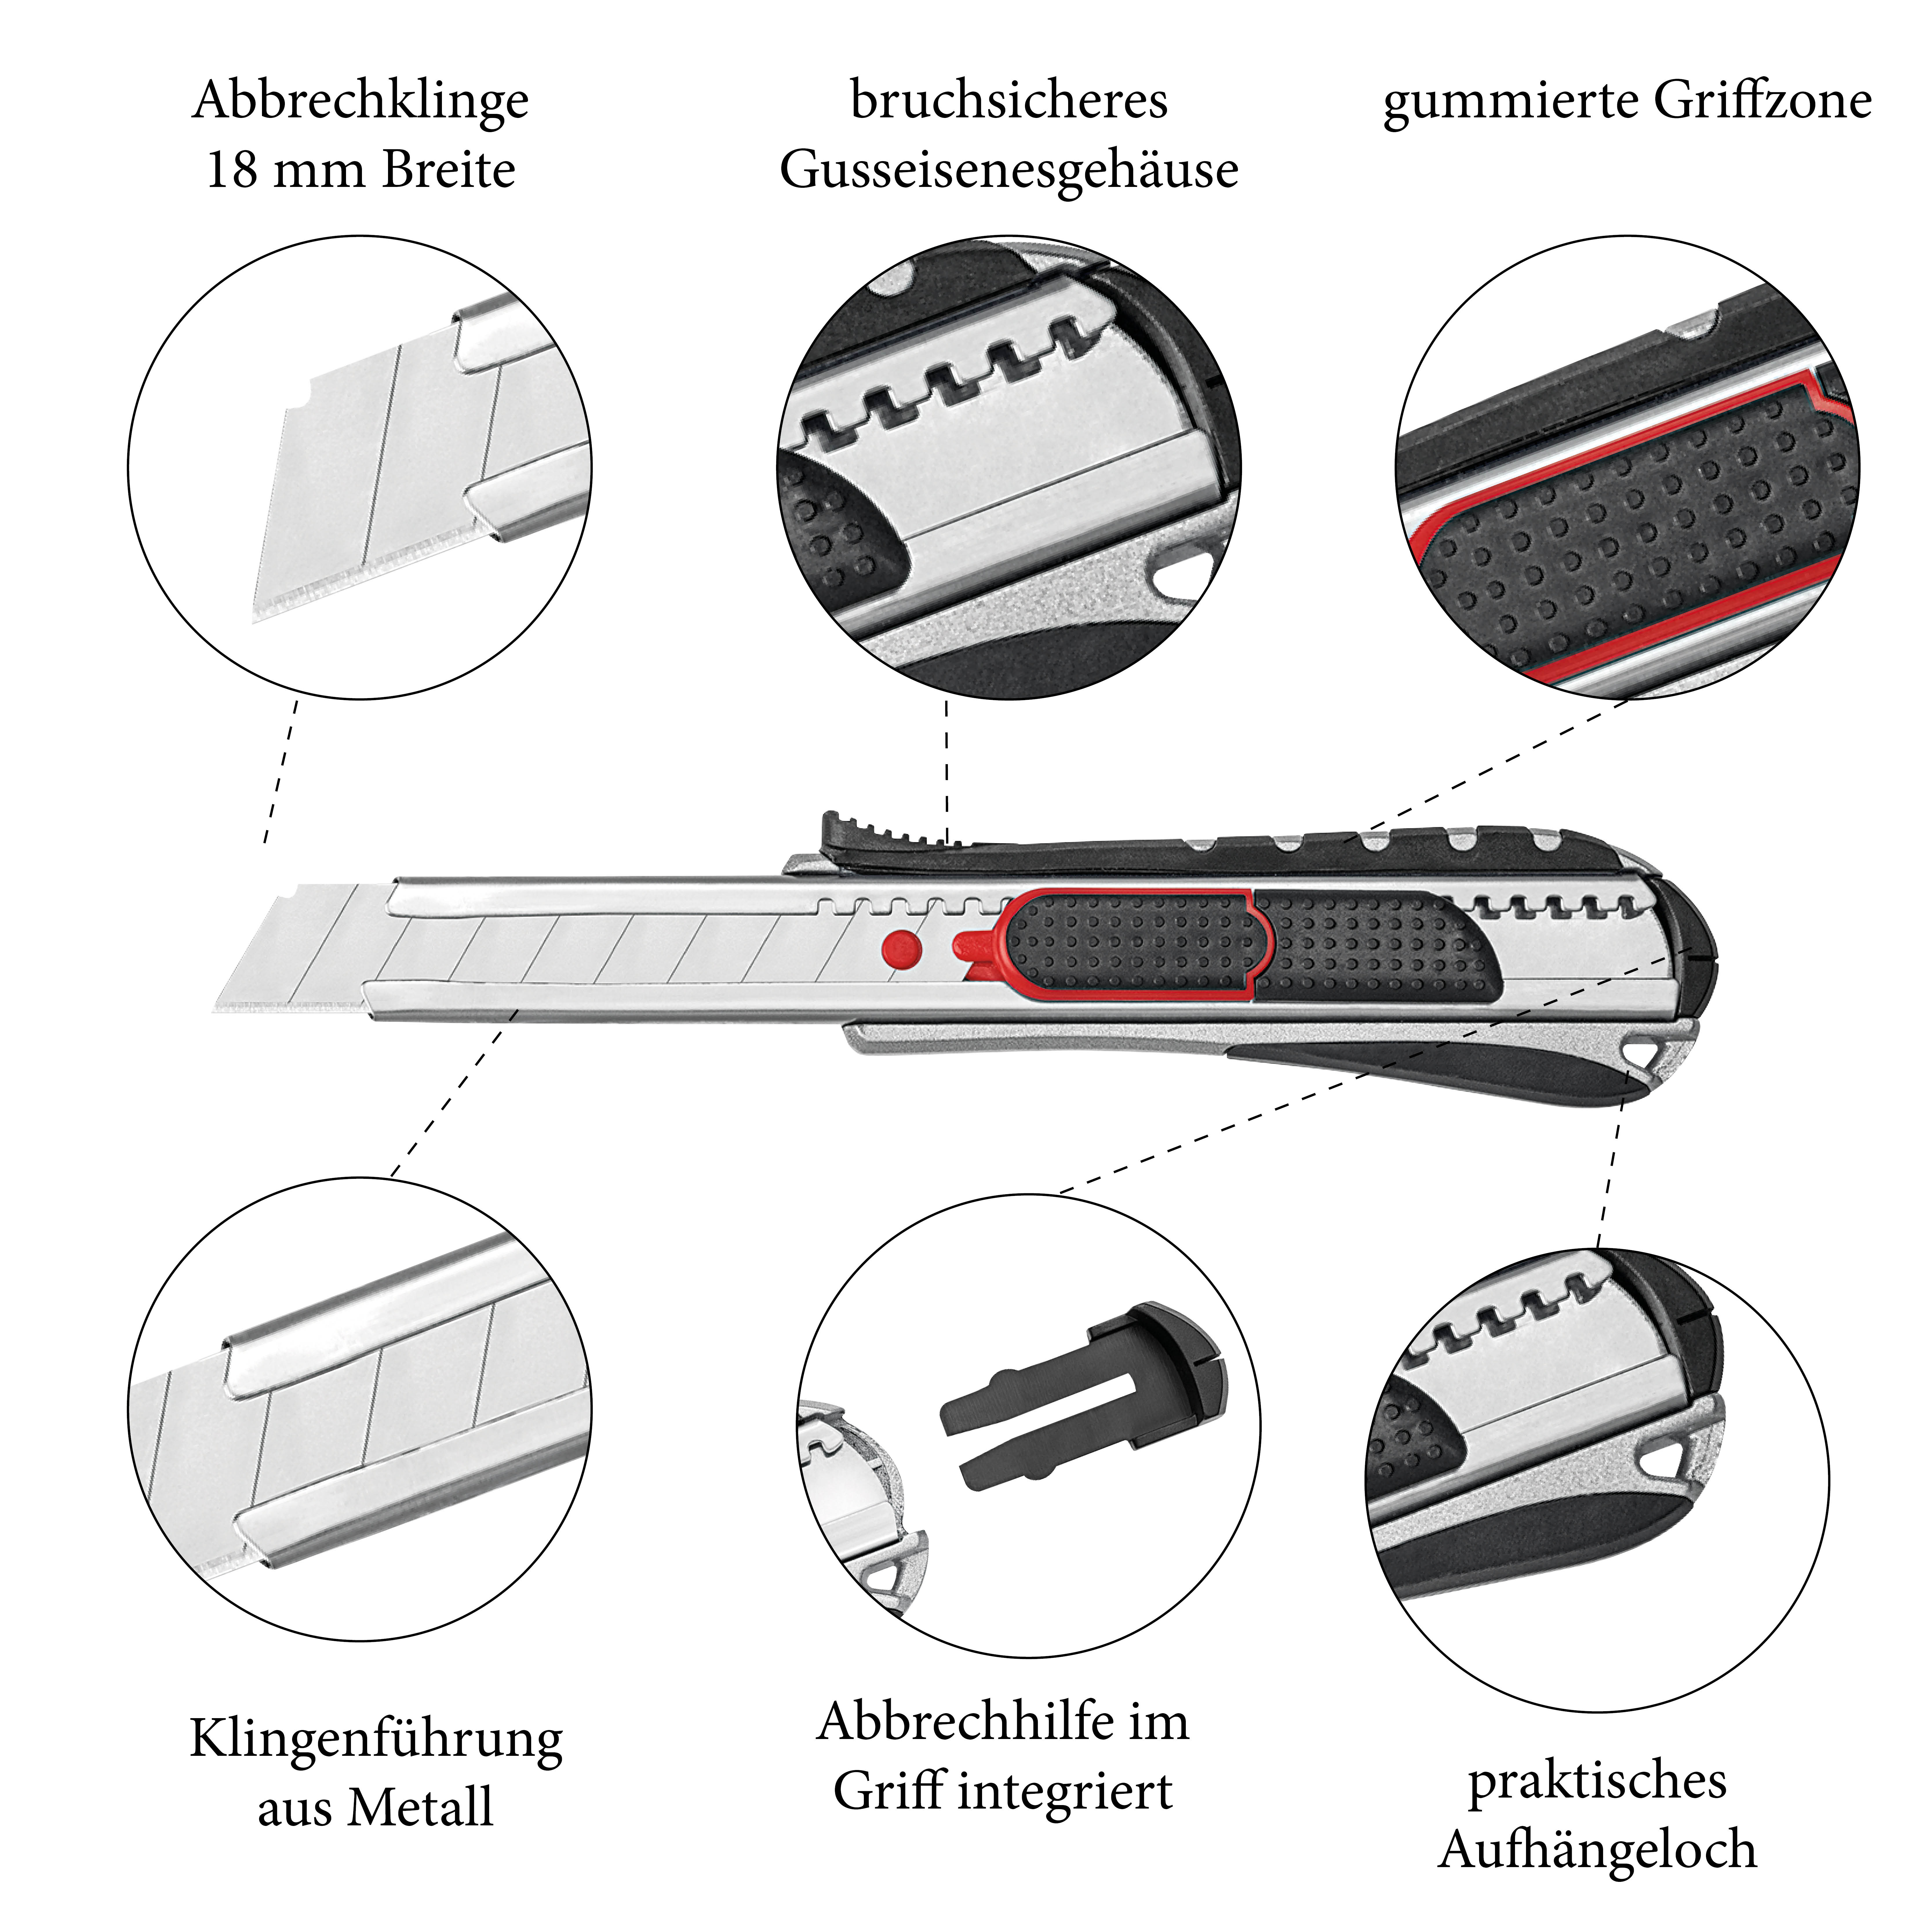 WEDO Cutter Safety-Cutter Cuttermesser Teppichmesser Profi Paketmesser Messer